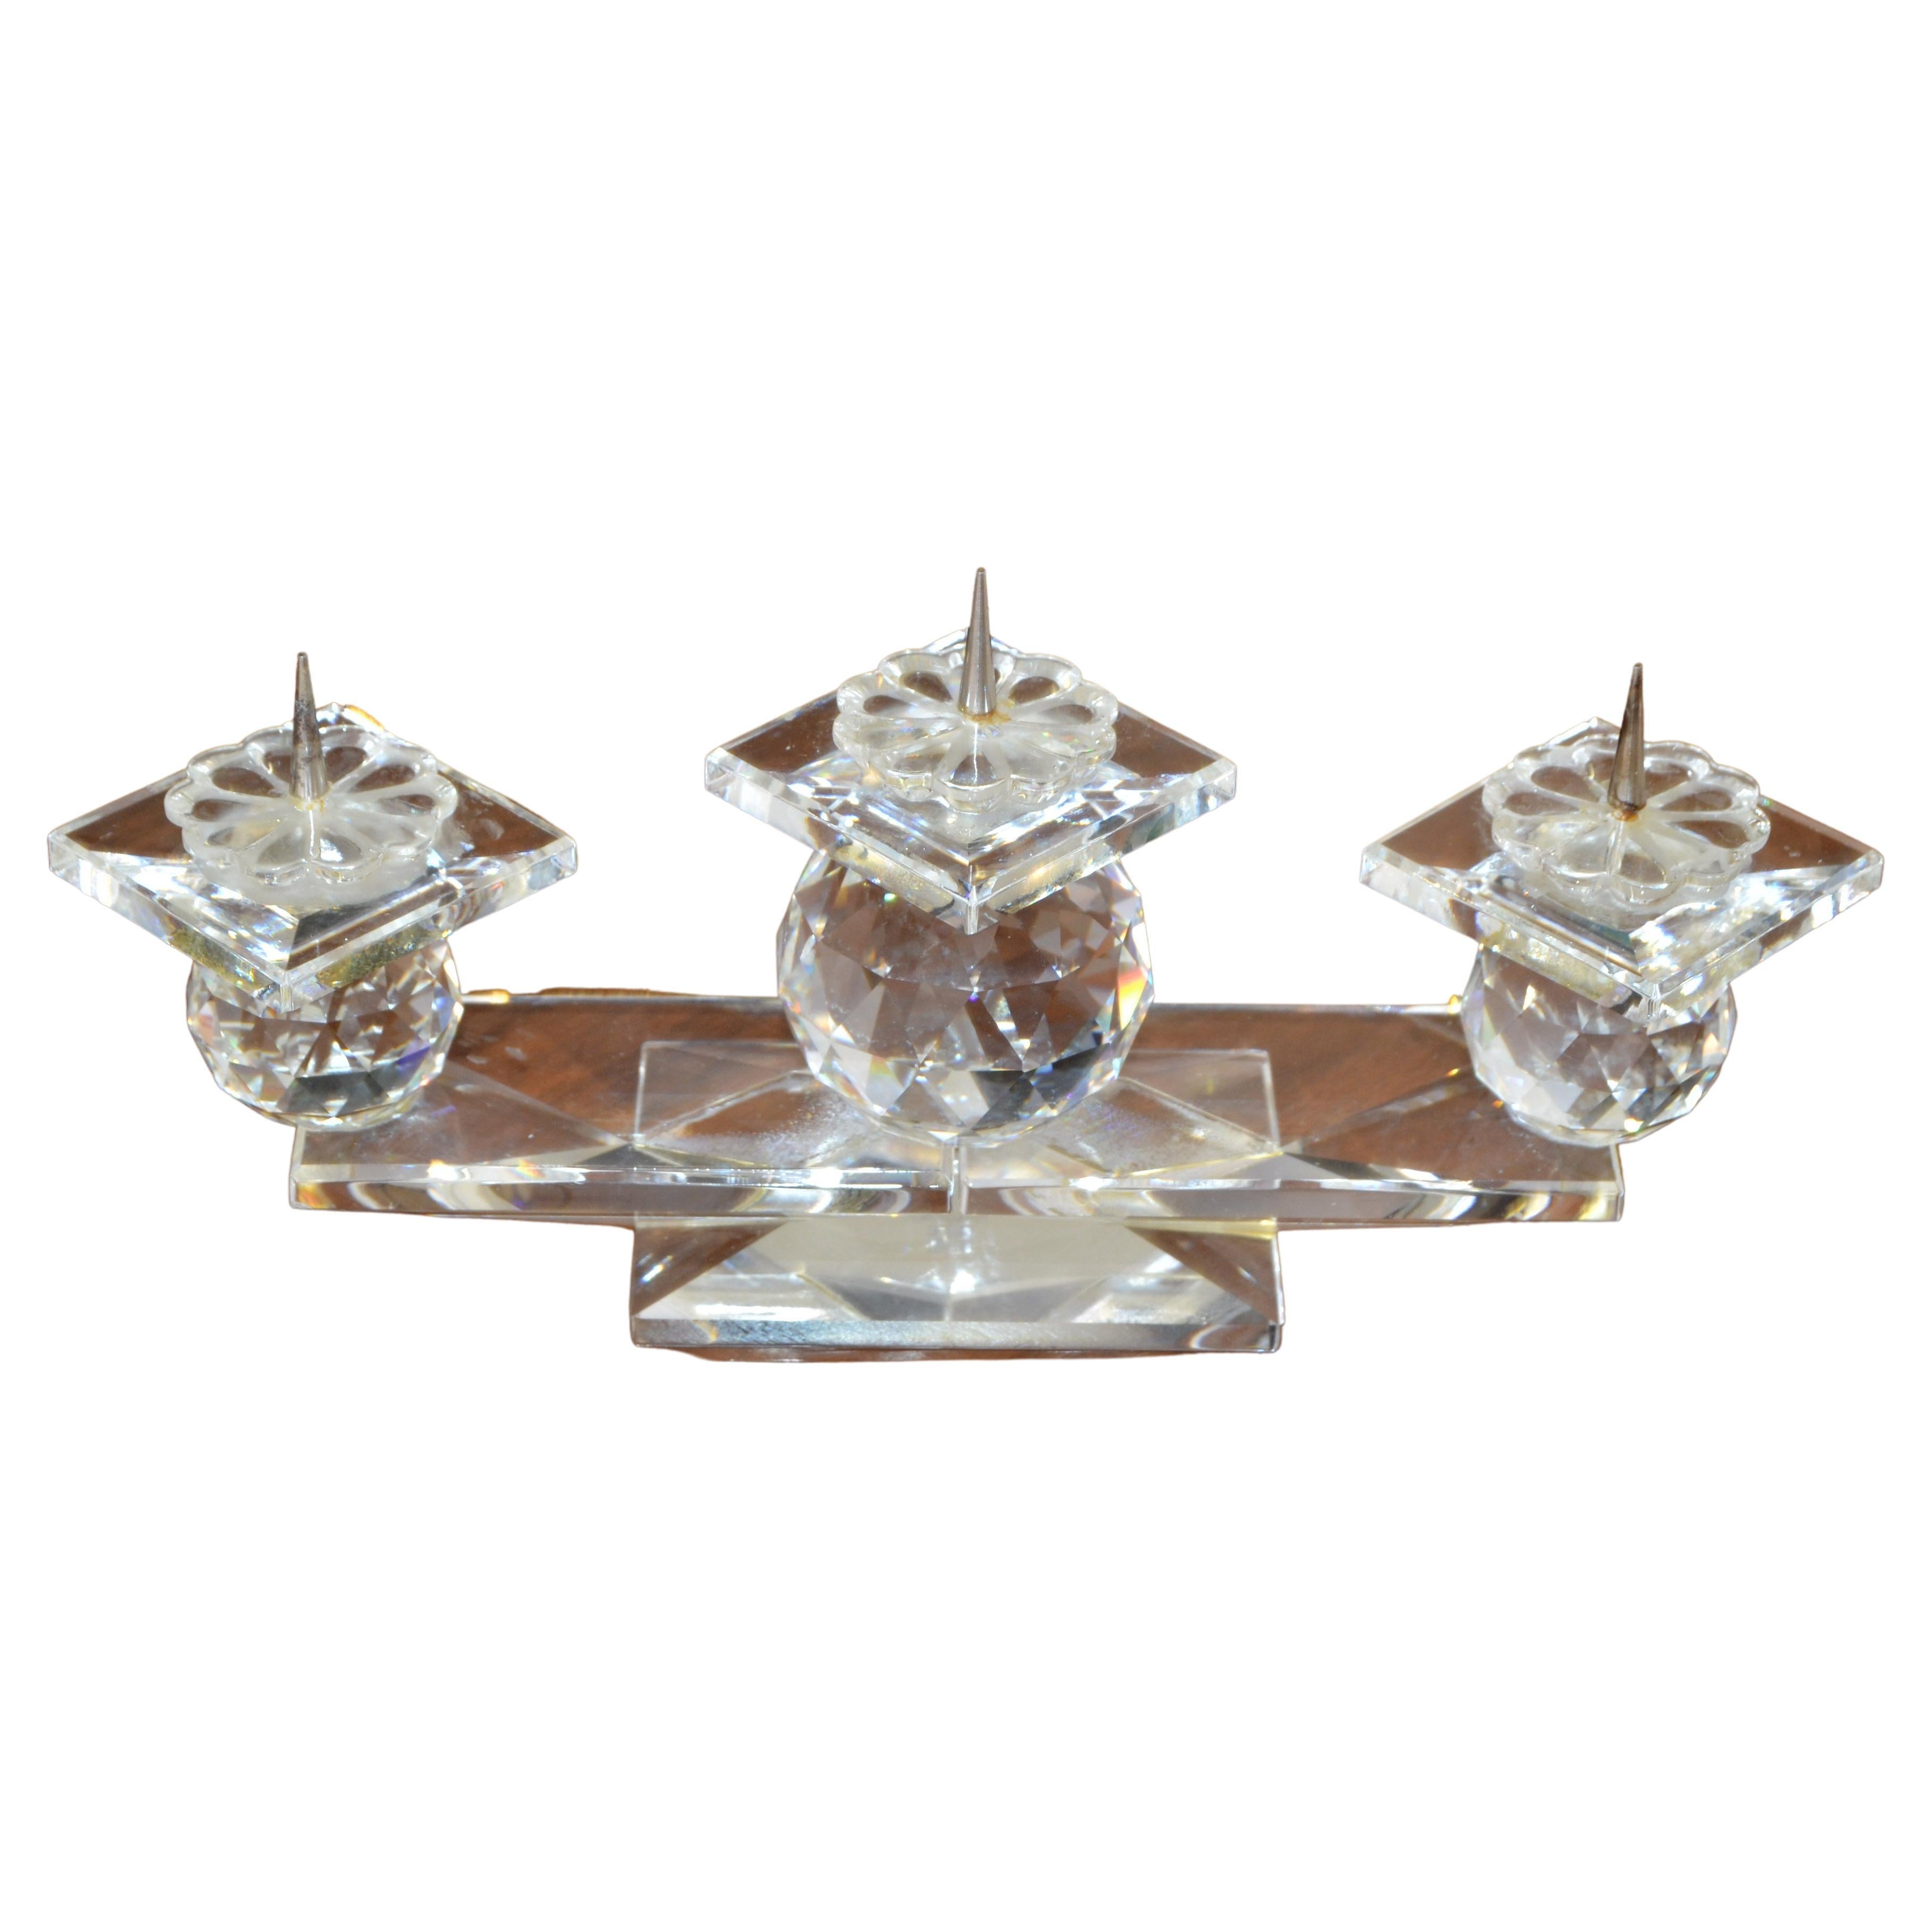 Vintage Swarovski Faceted Crystal Triple Pin Candlesticks Art Deco Style 1970